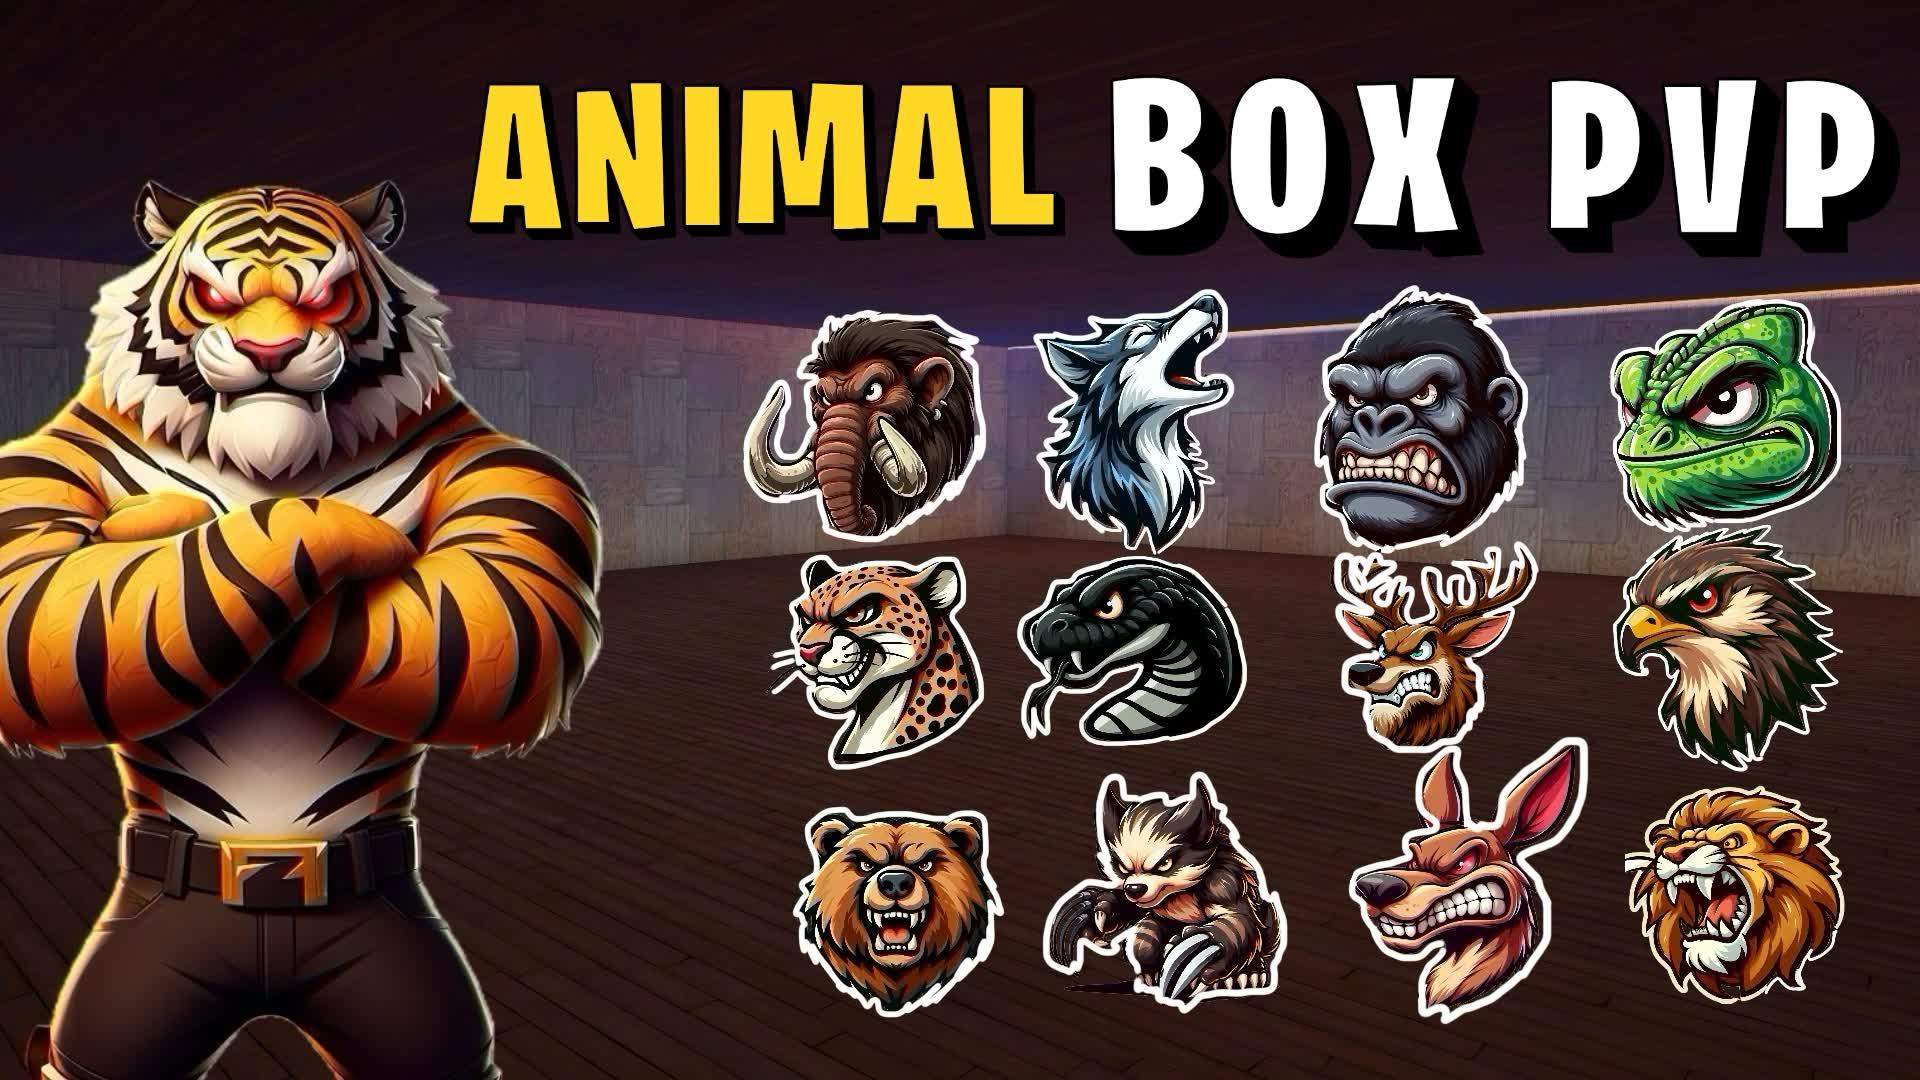 ANIMAL BOX PVP